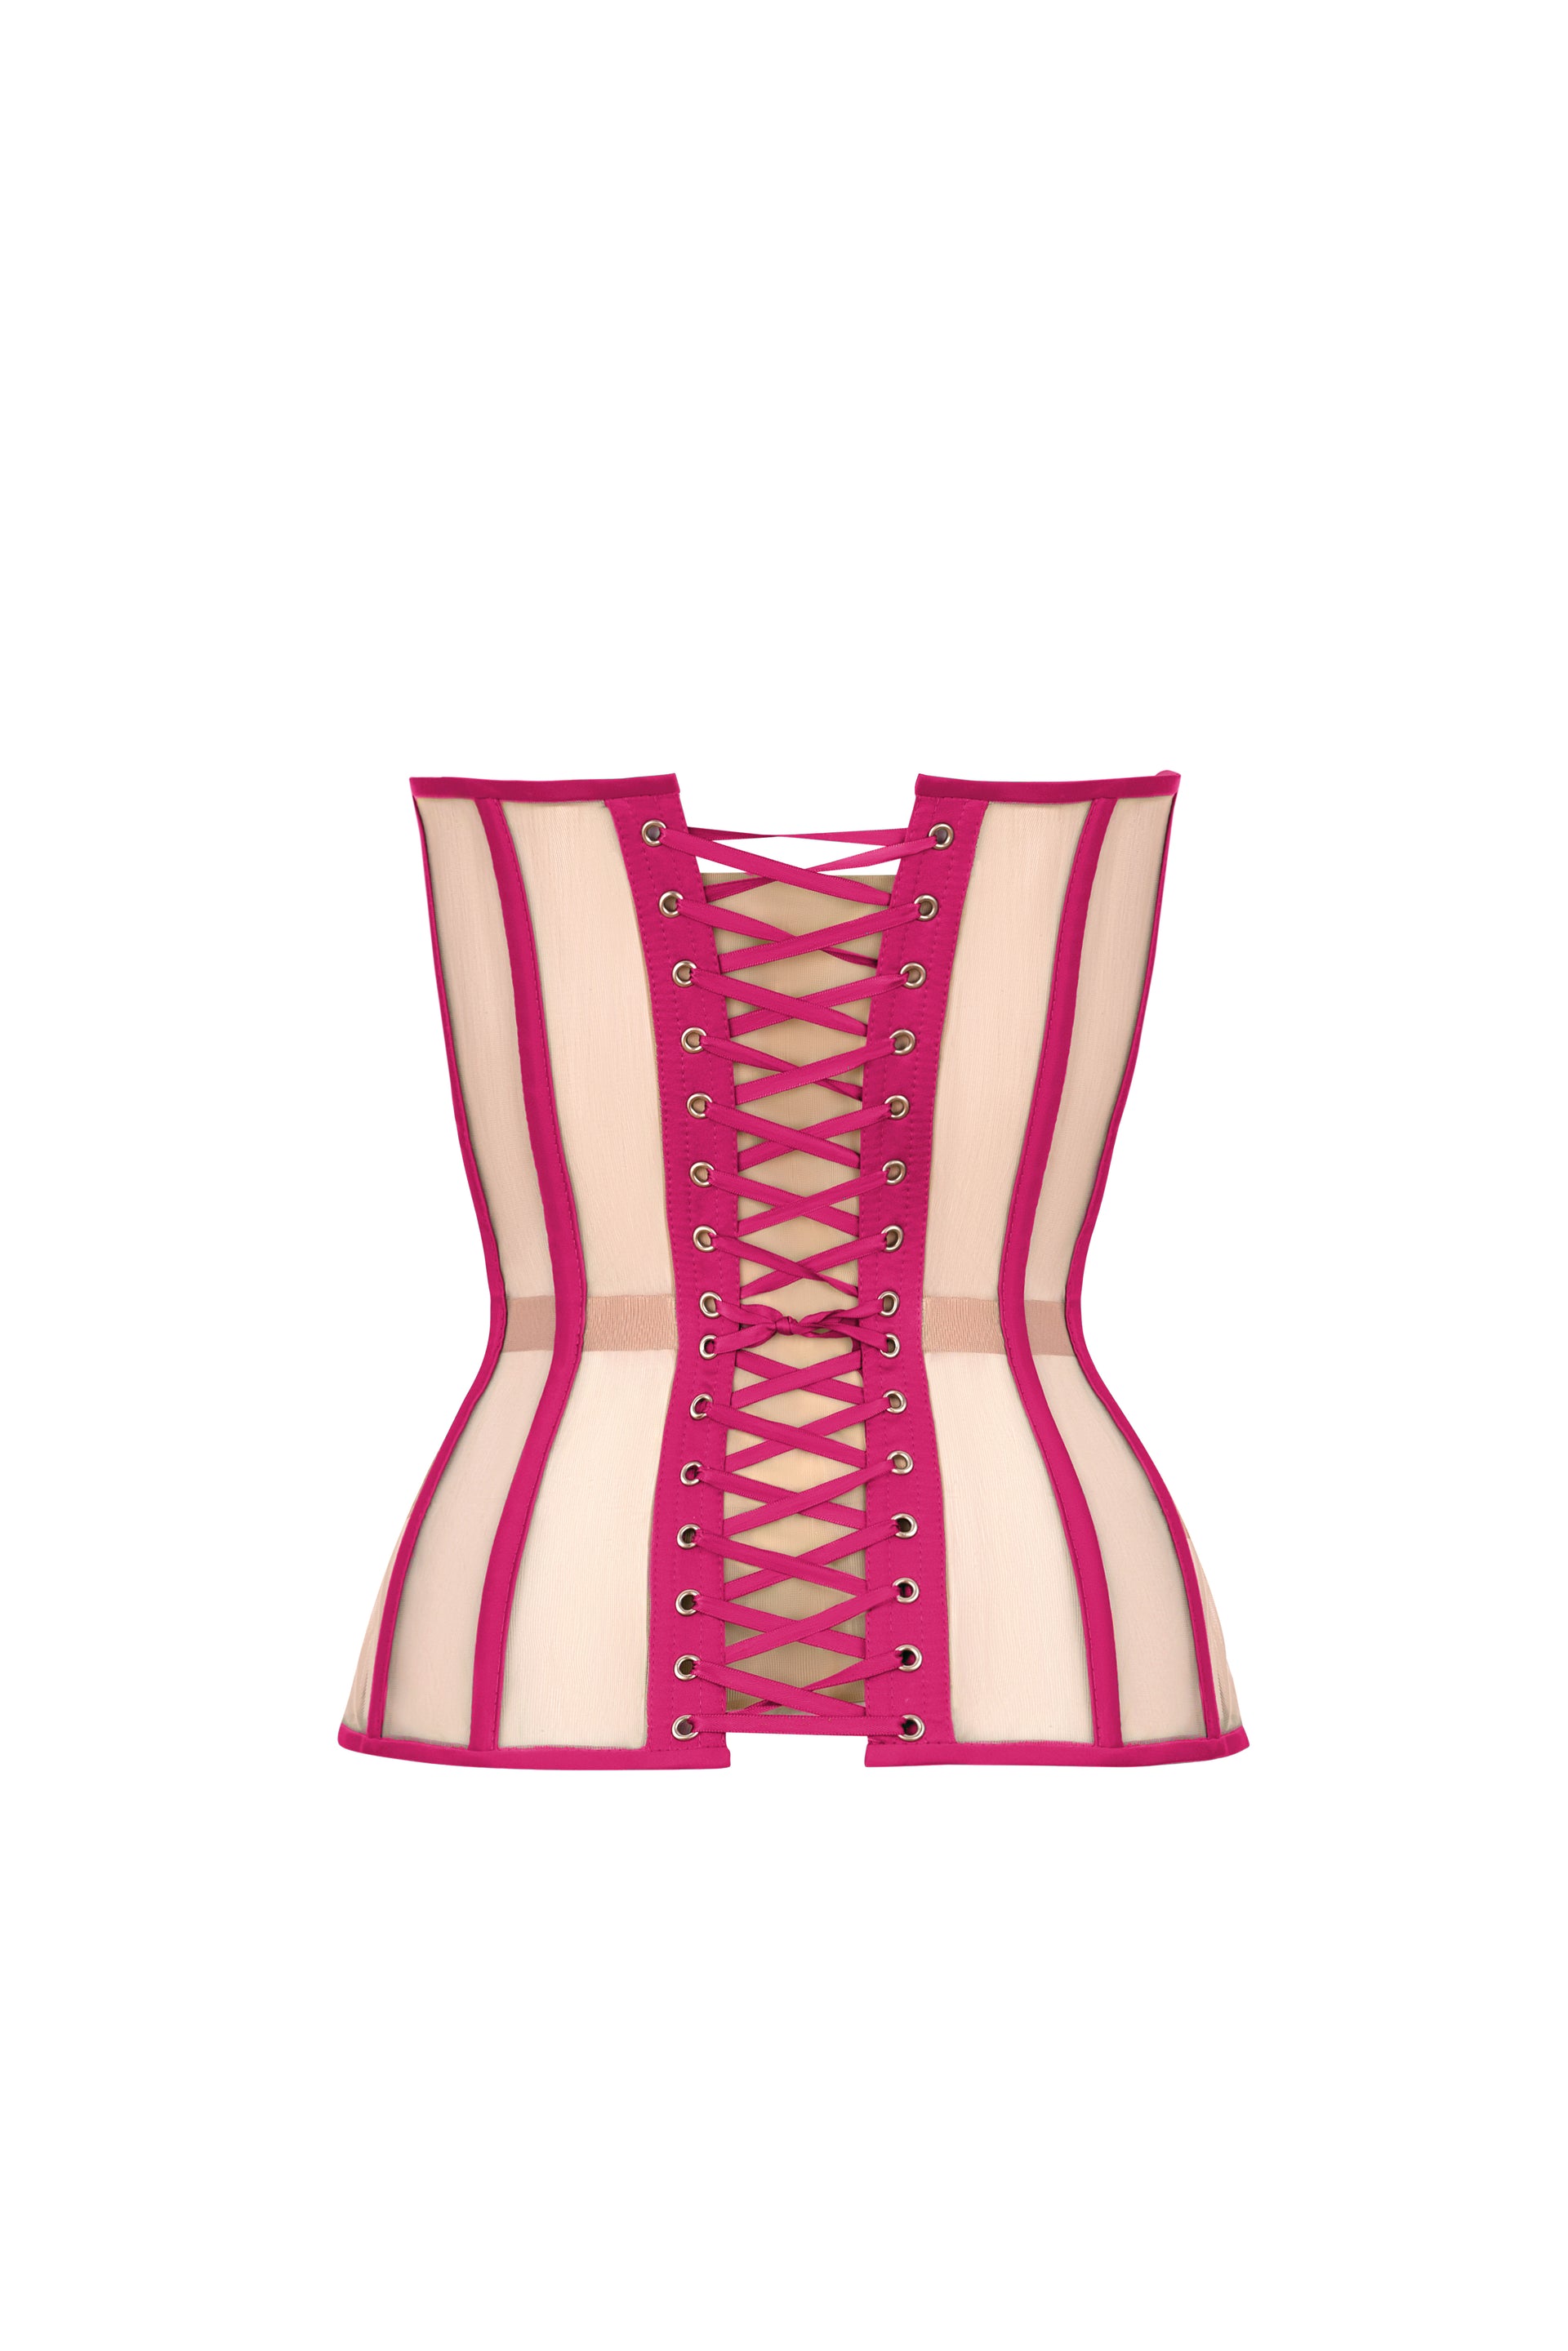 Shocking pink satin corset with transparent back